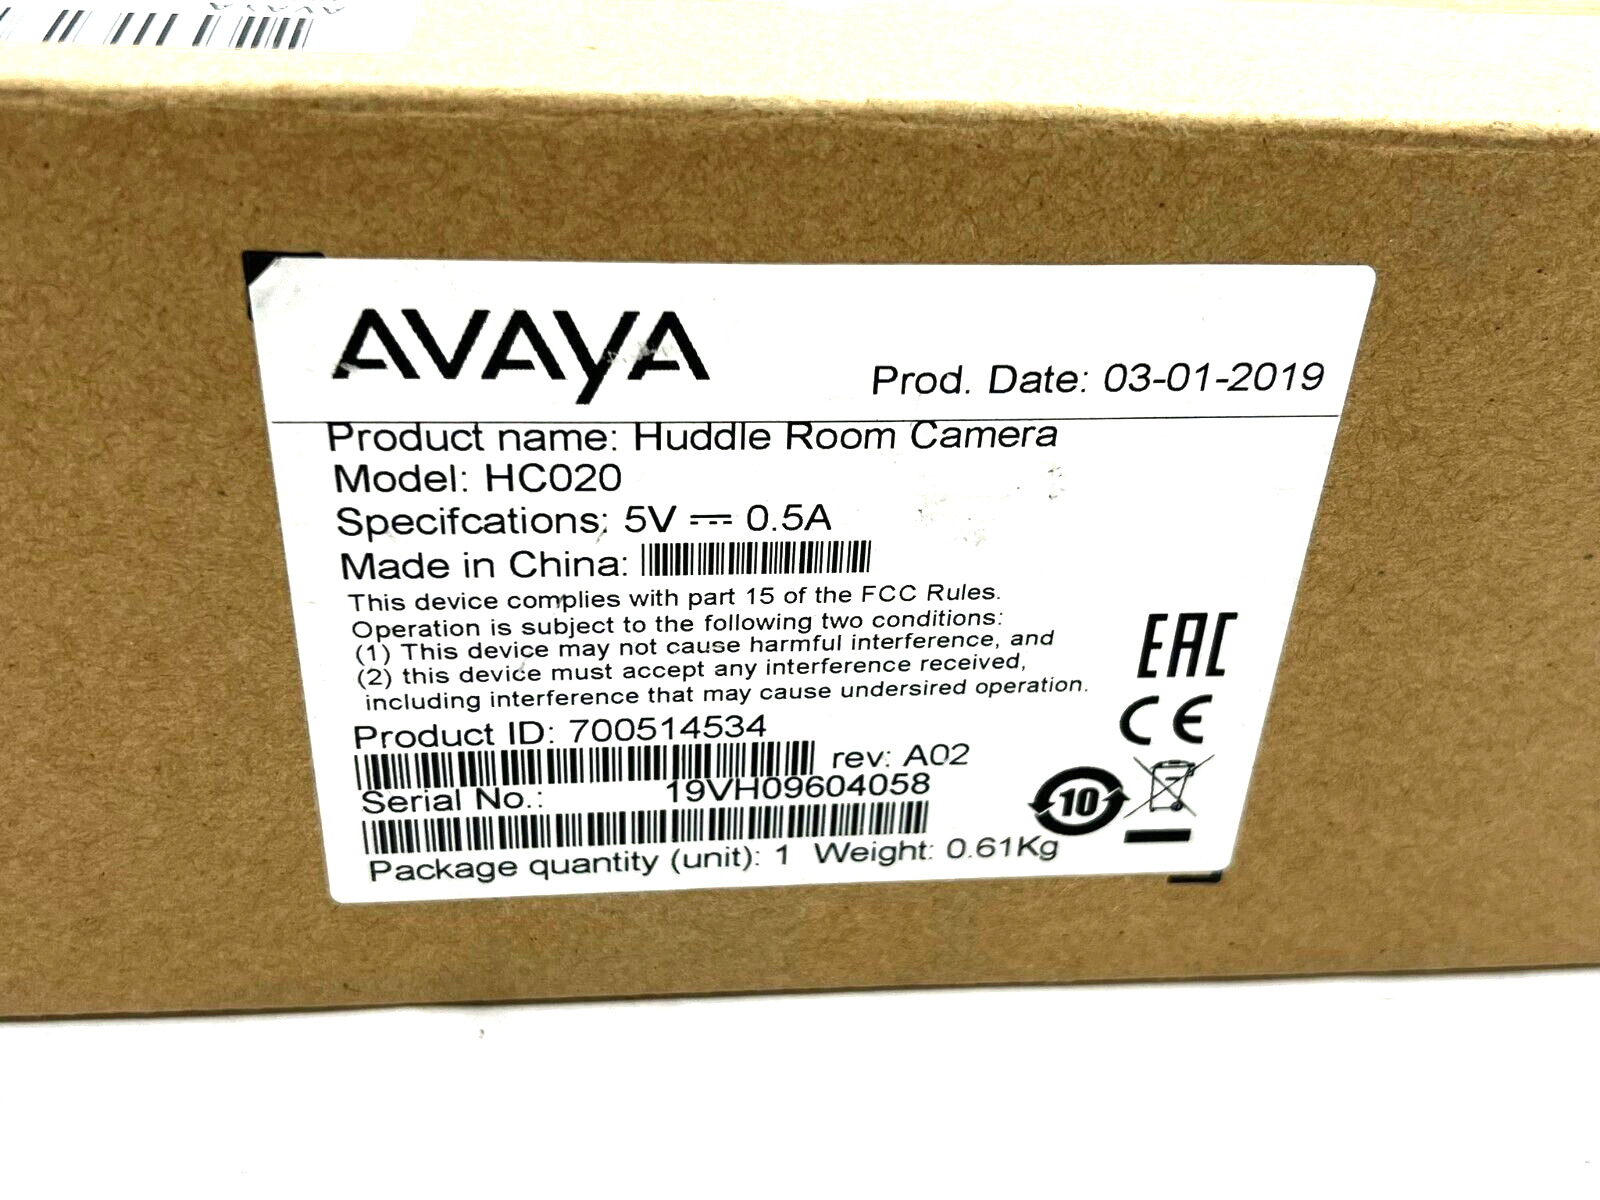 Lot of 2:Avaya HC020 Huddle Room Camera with 4K Video Capability ( New Open Box)